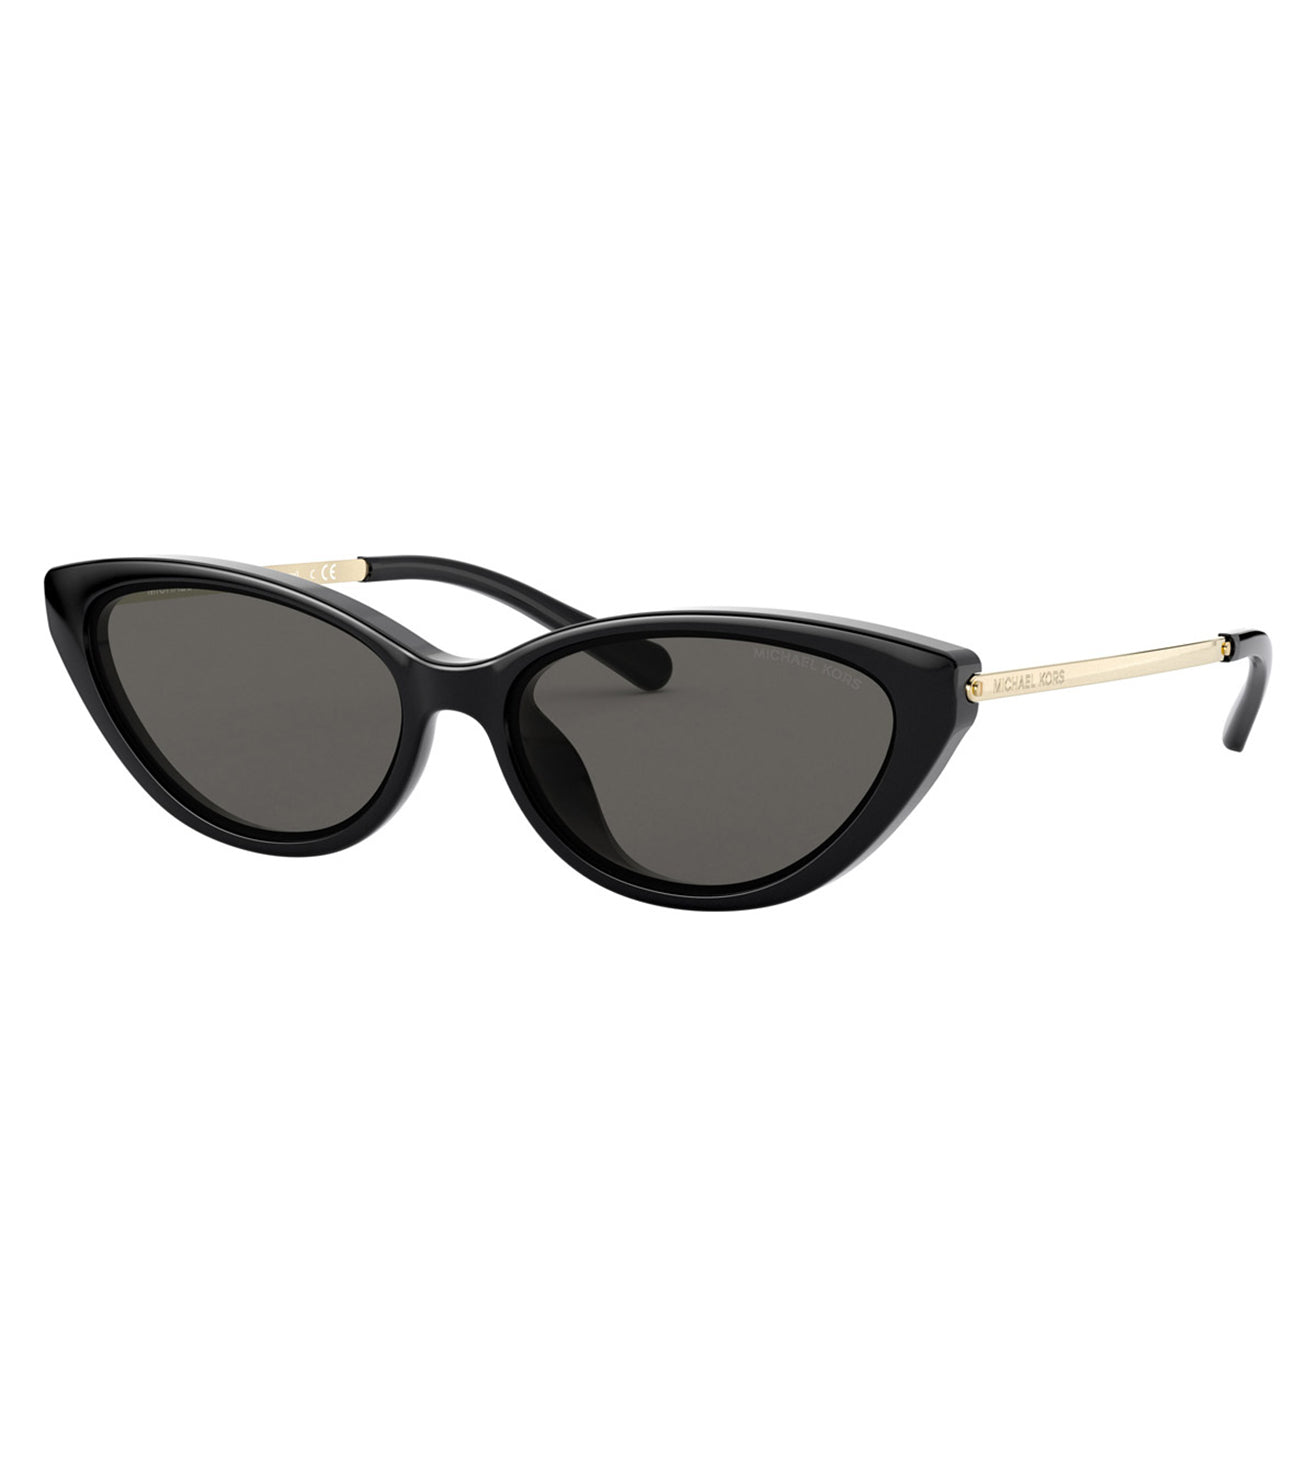 Cateye Grey Sunglasses